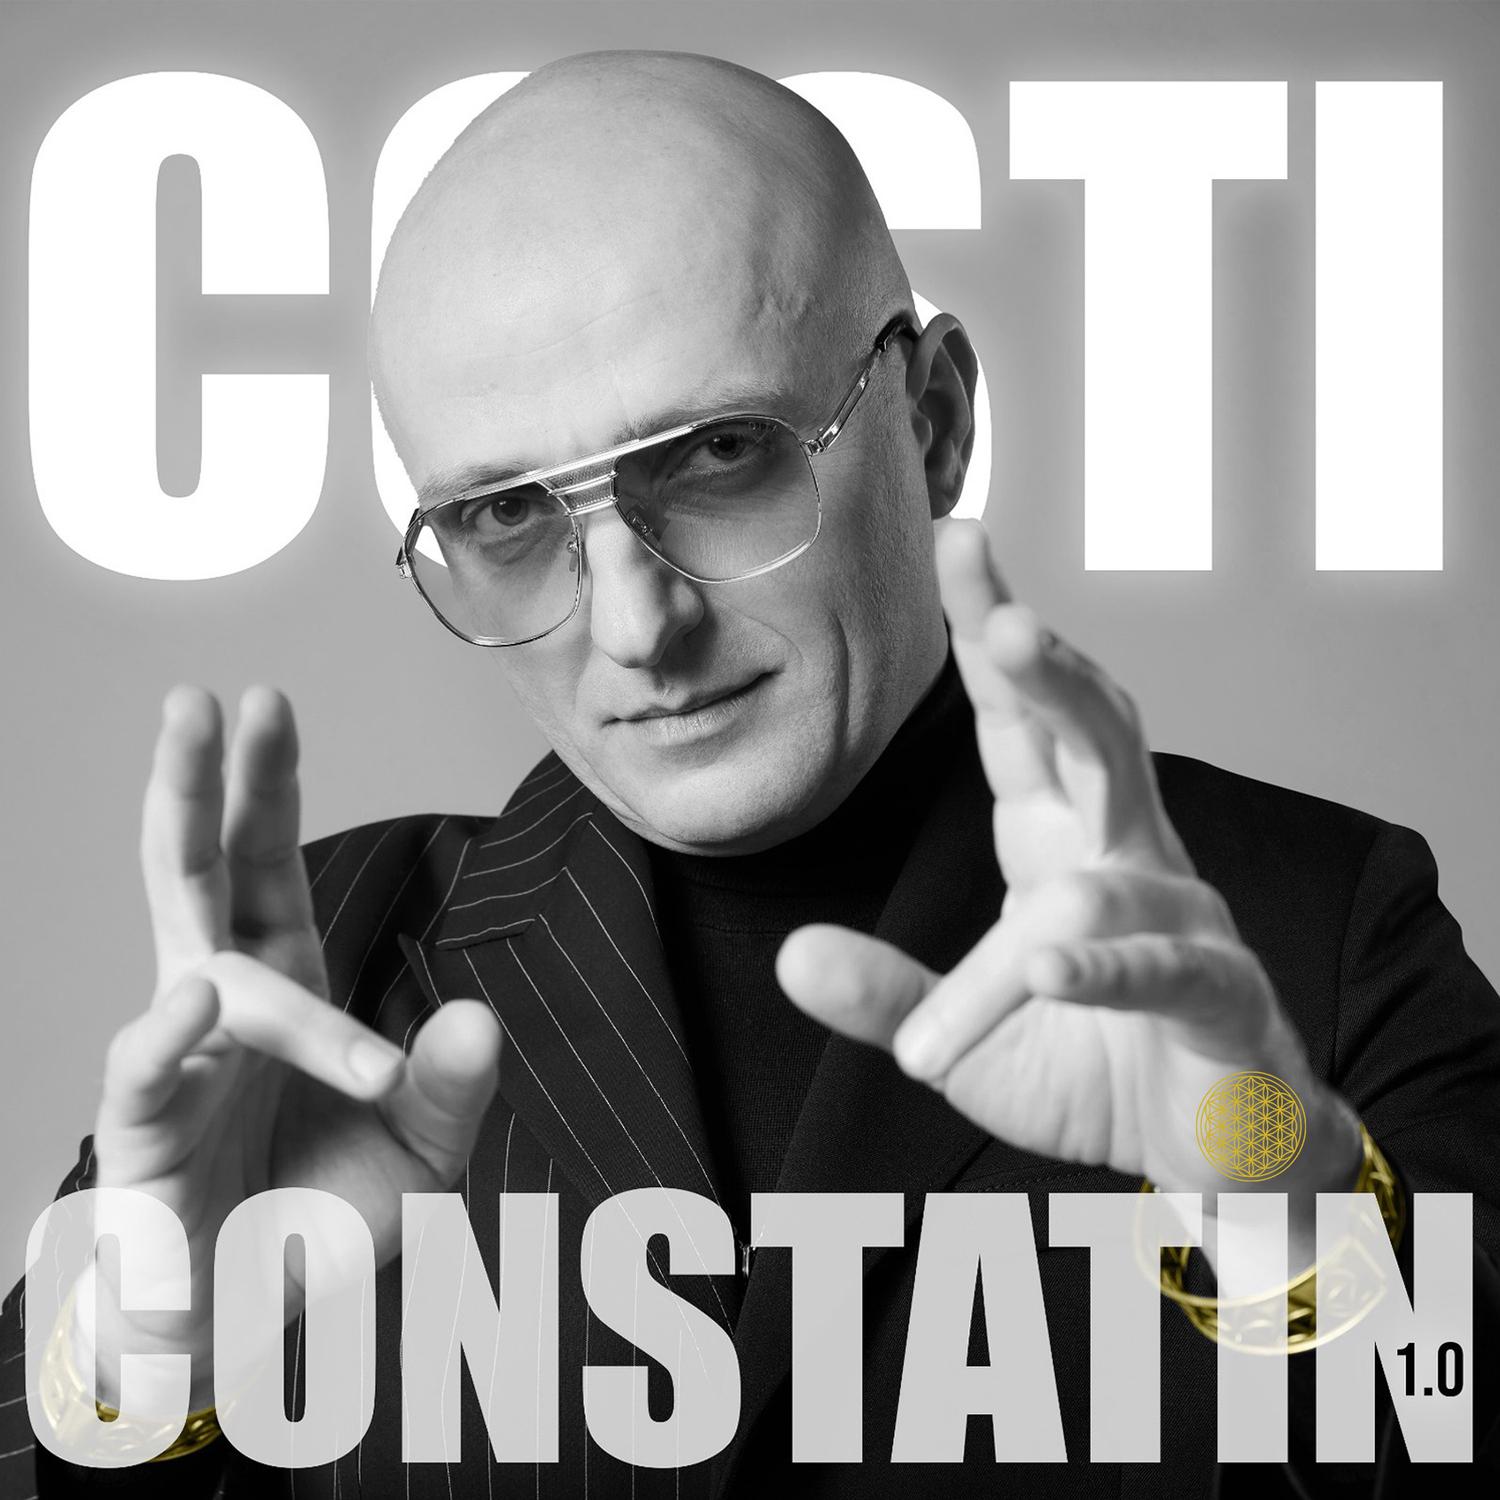 Costi - Soul